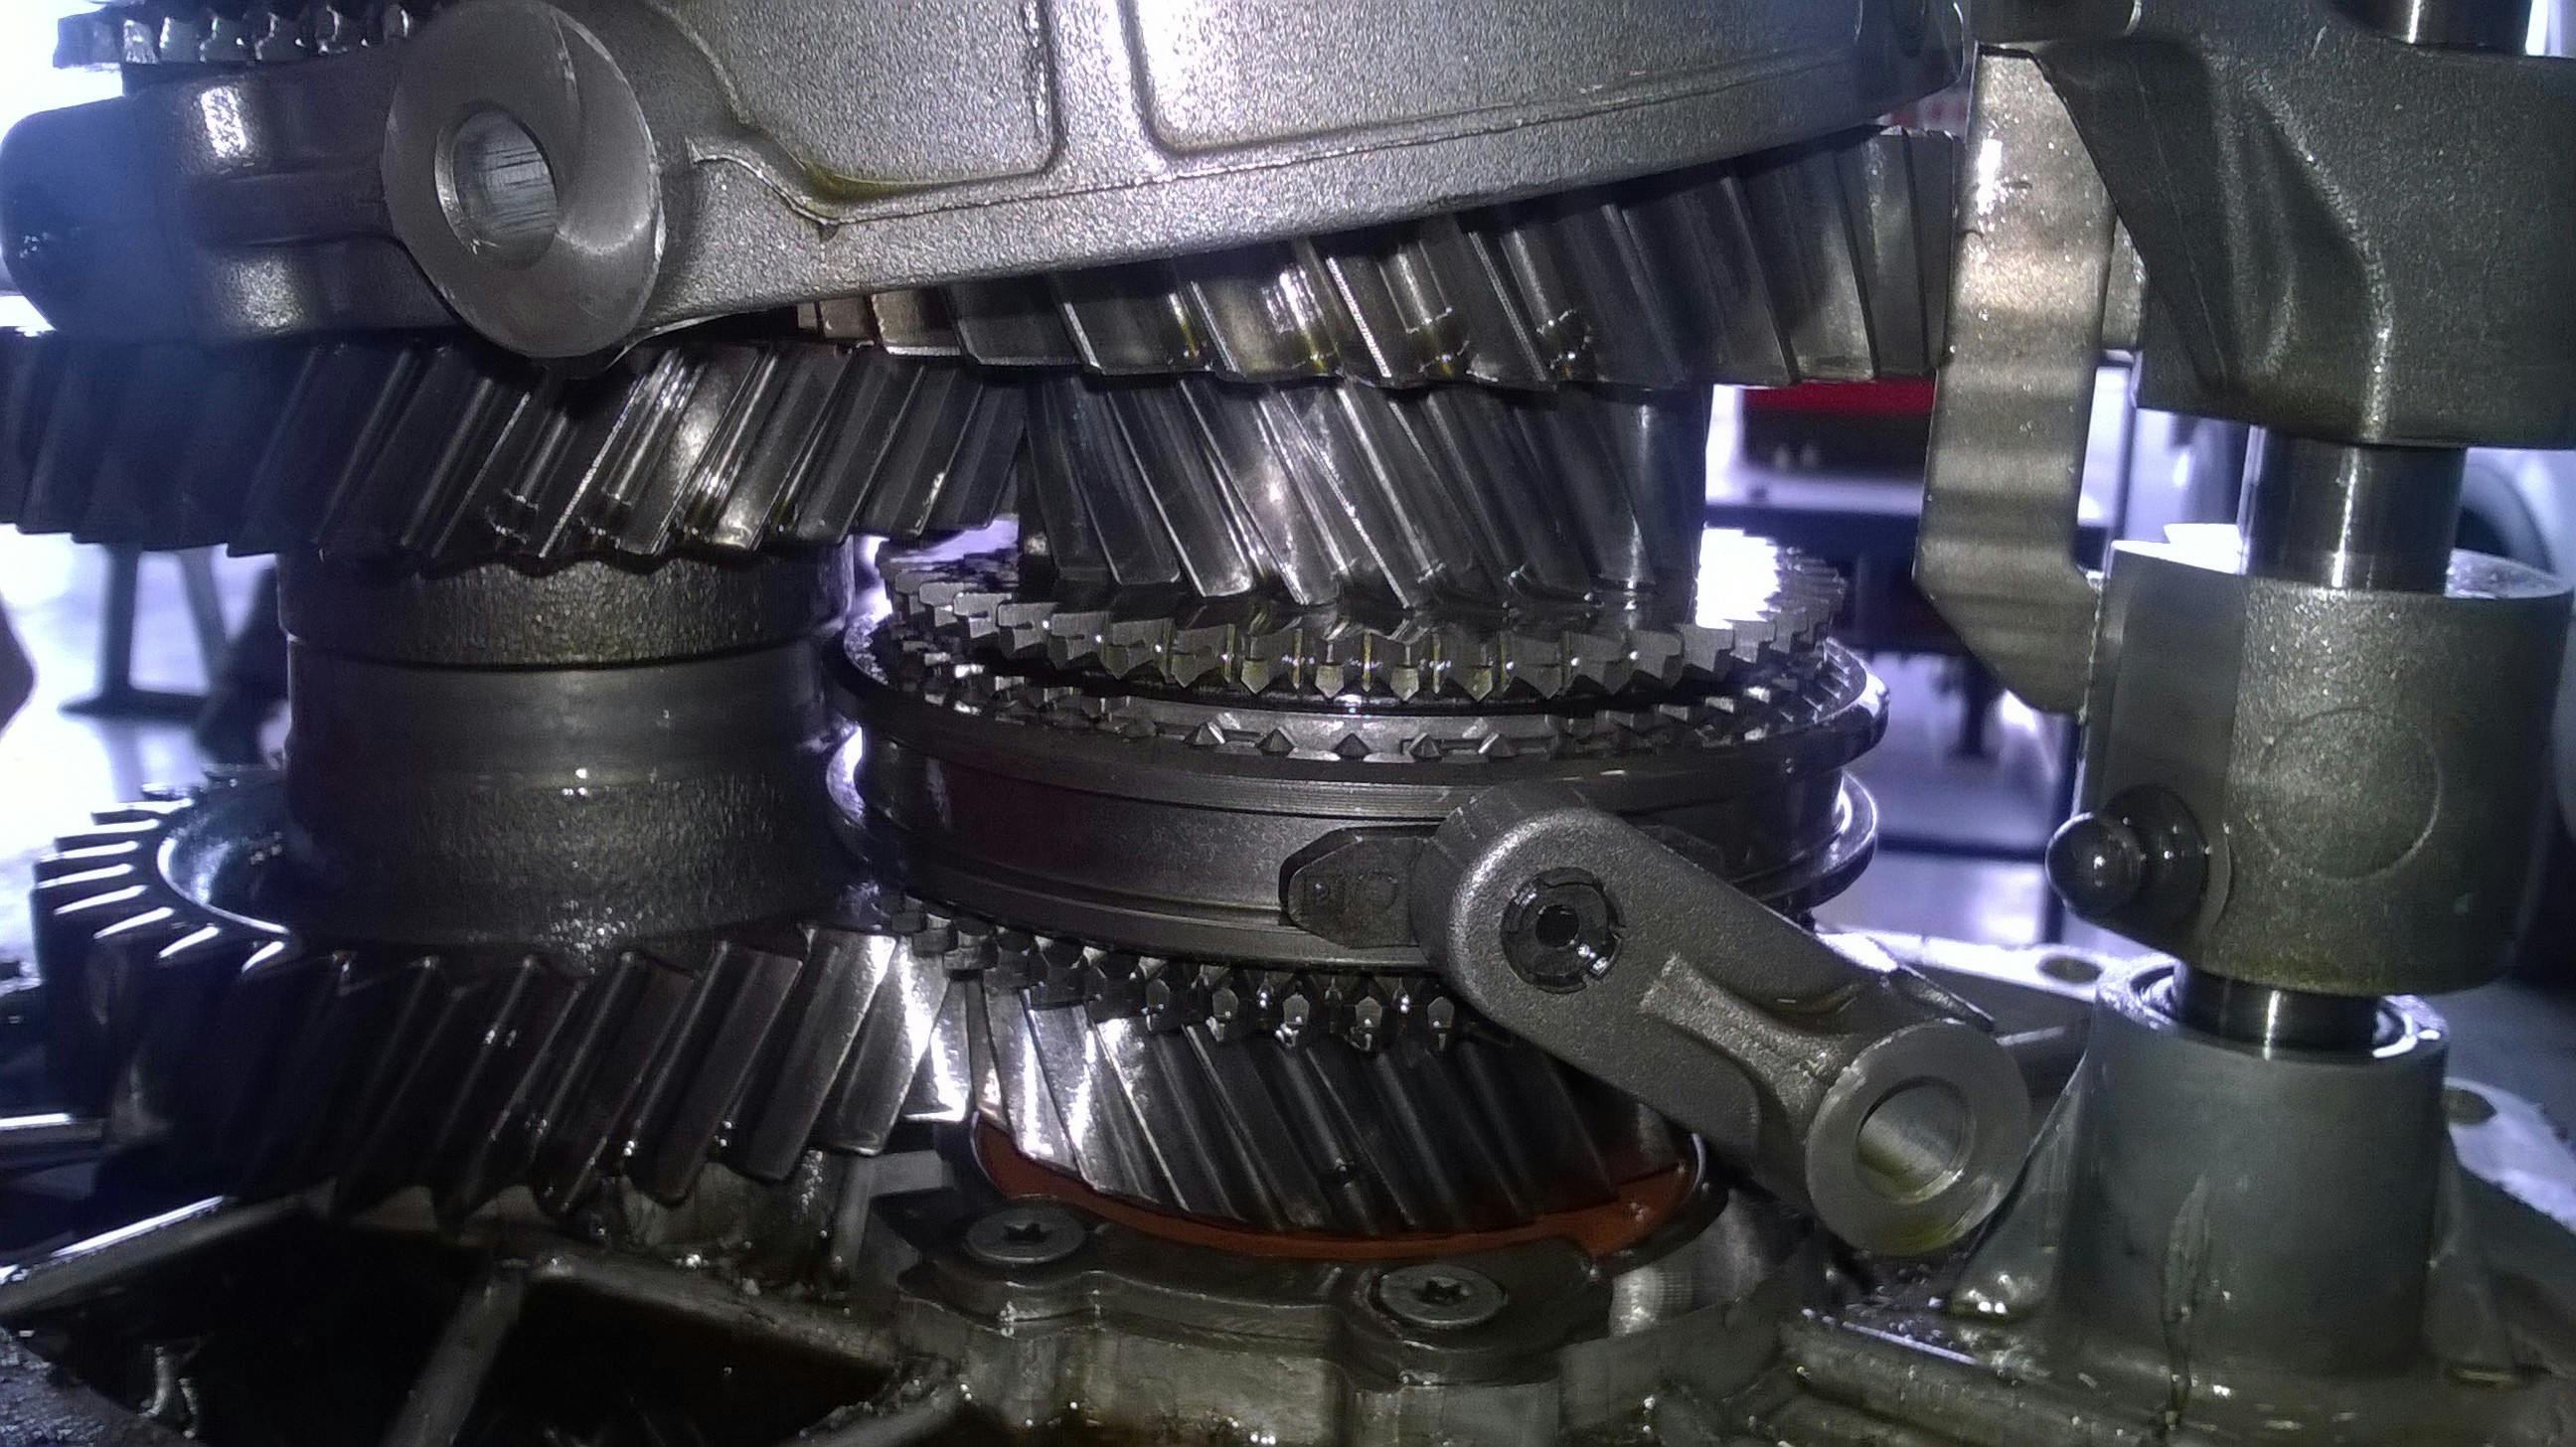 Free stock photo of engine, gears, mechanical